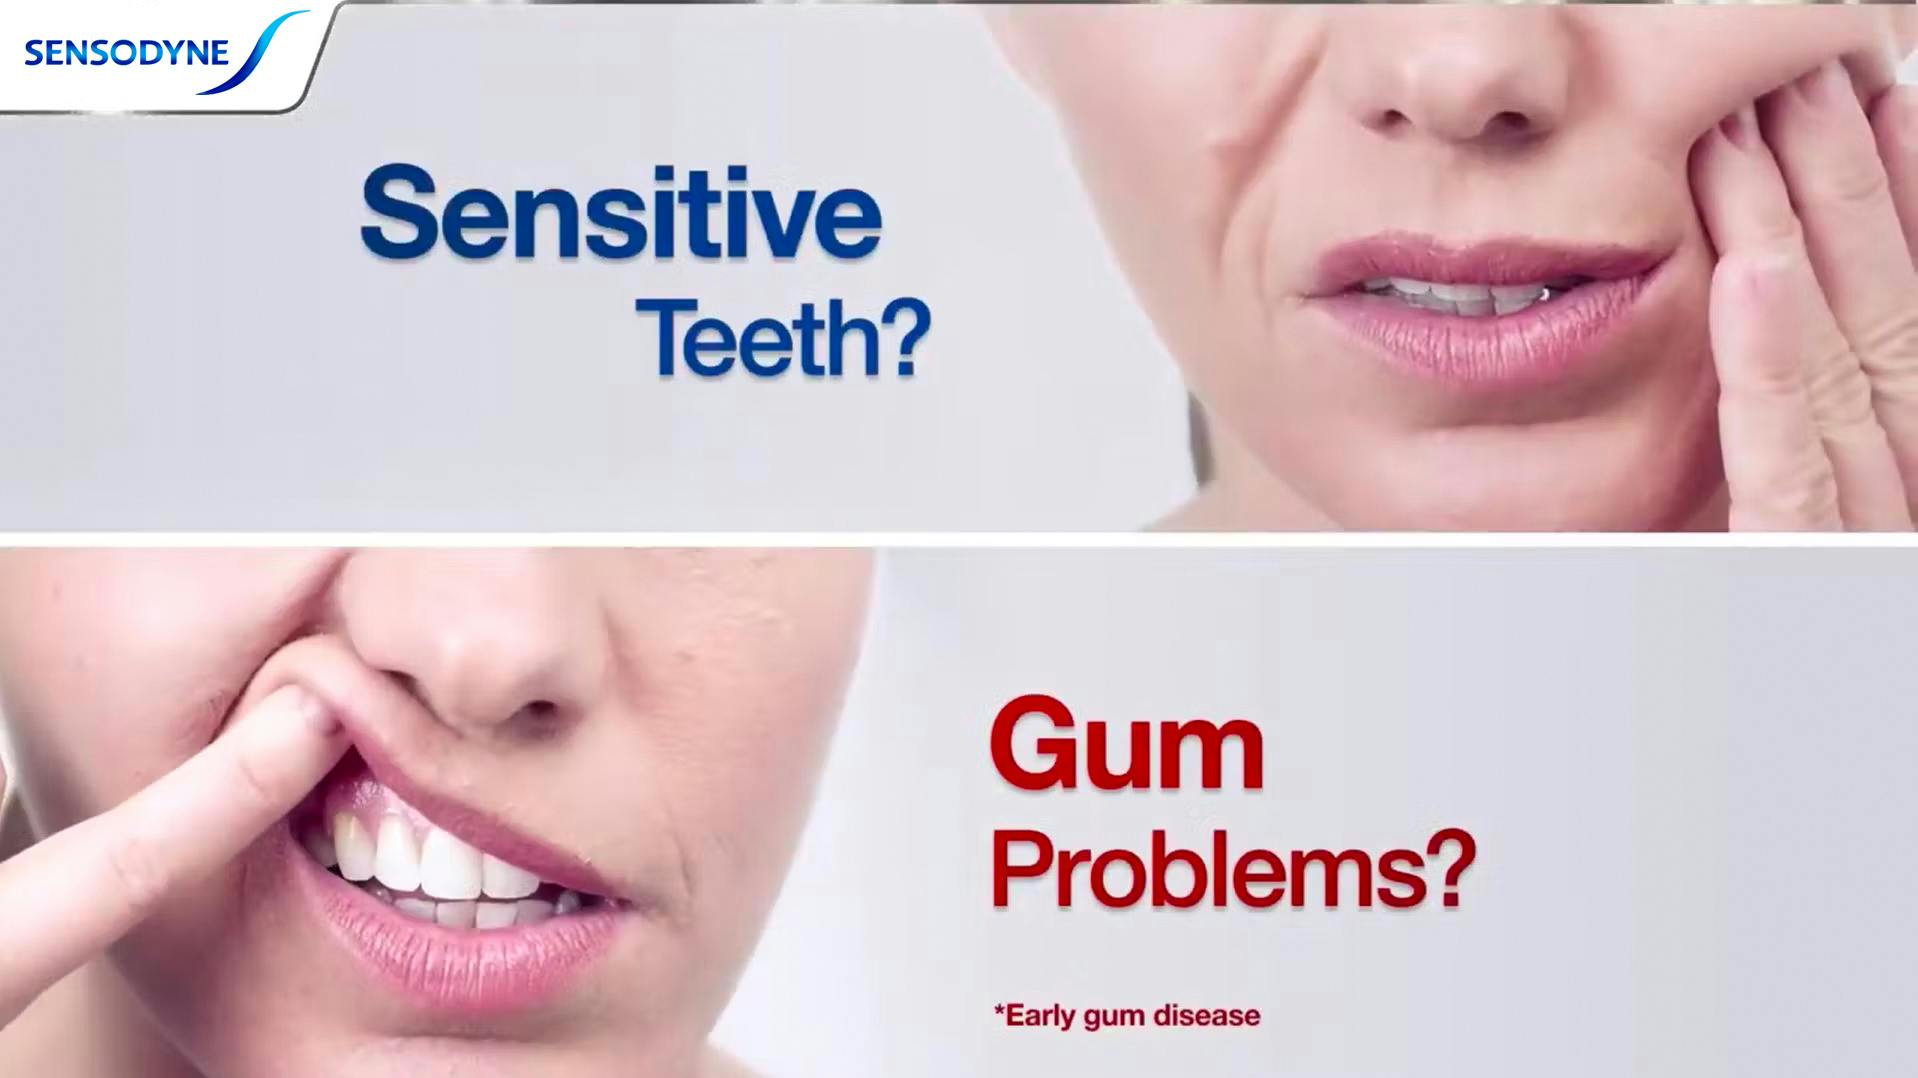 Sensitive teeth and gum problems